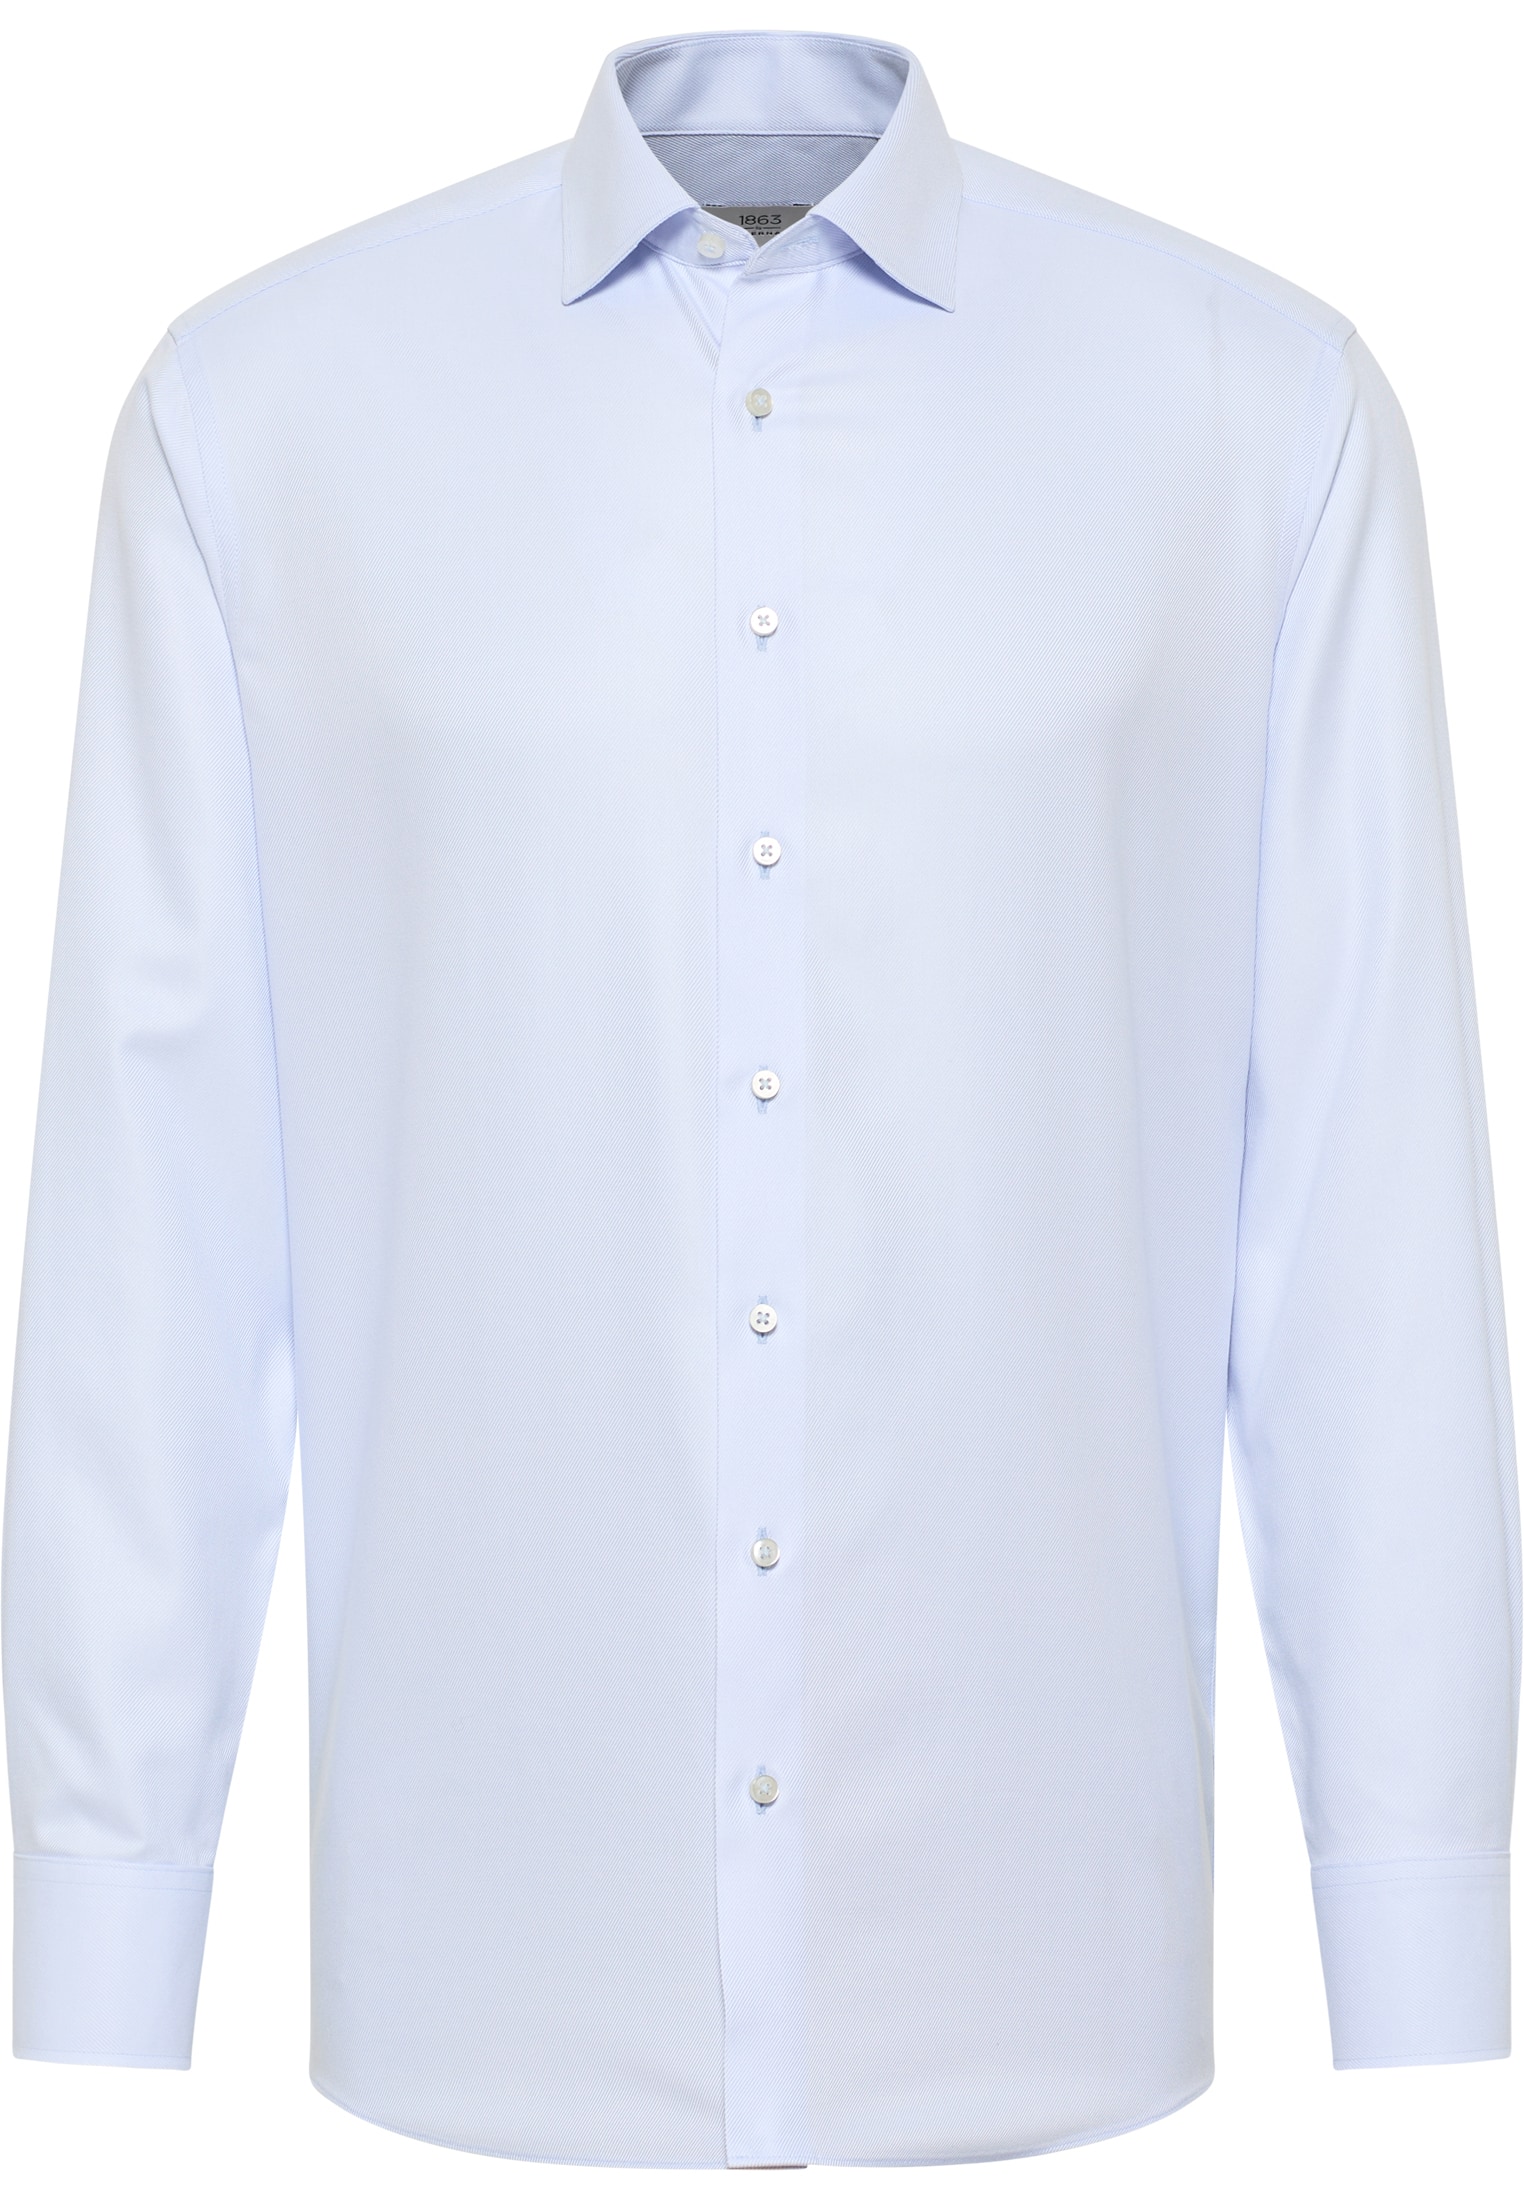 MODERN FIT Shirt in light blue structured